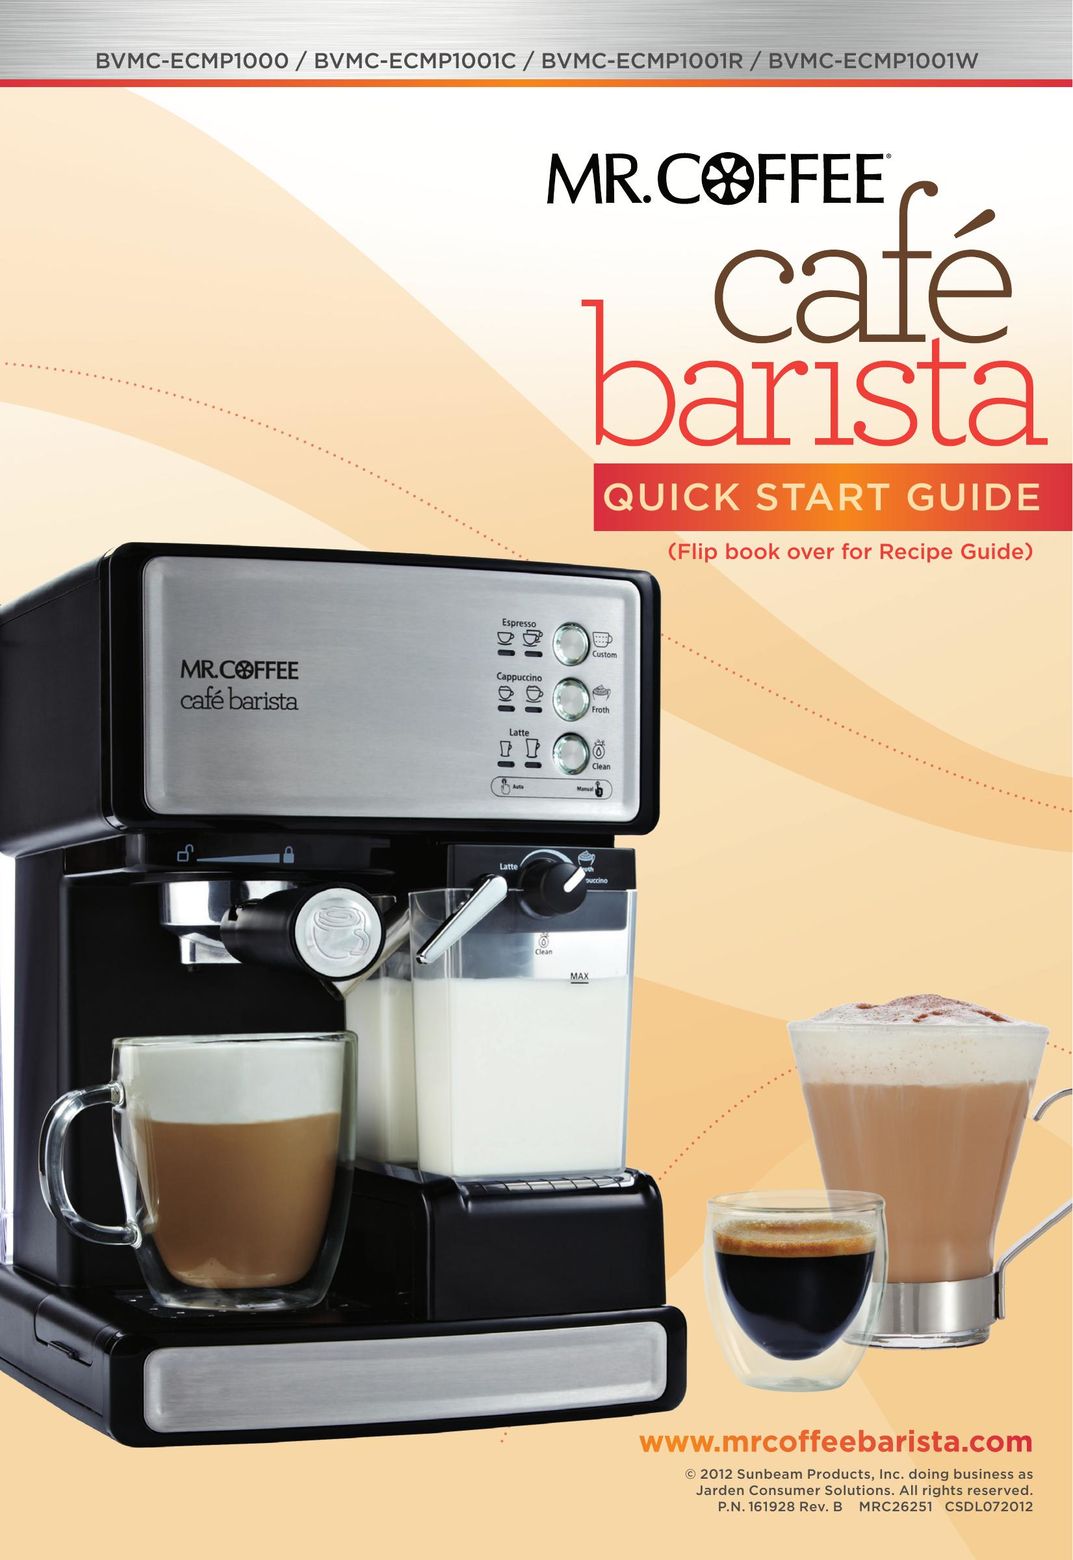 Mr. Coffee BVMC-ECMP1001C Coffeemaker User Manual